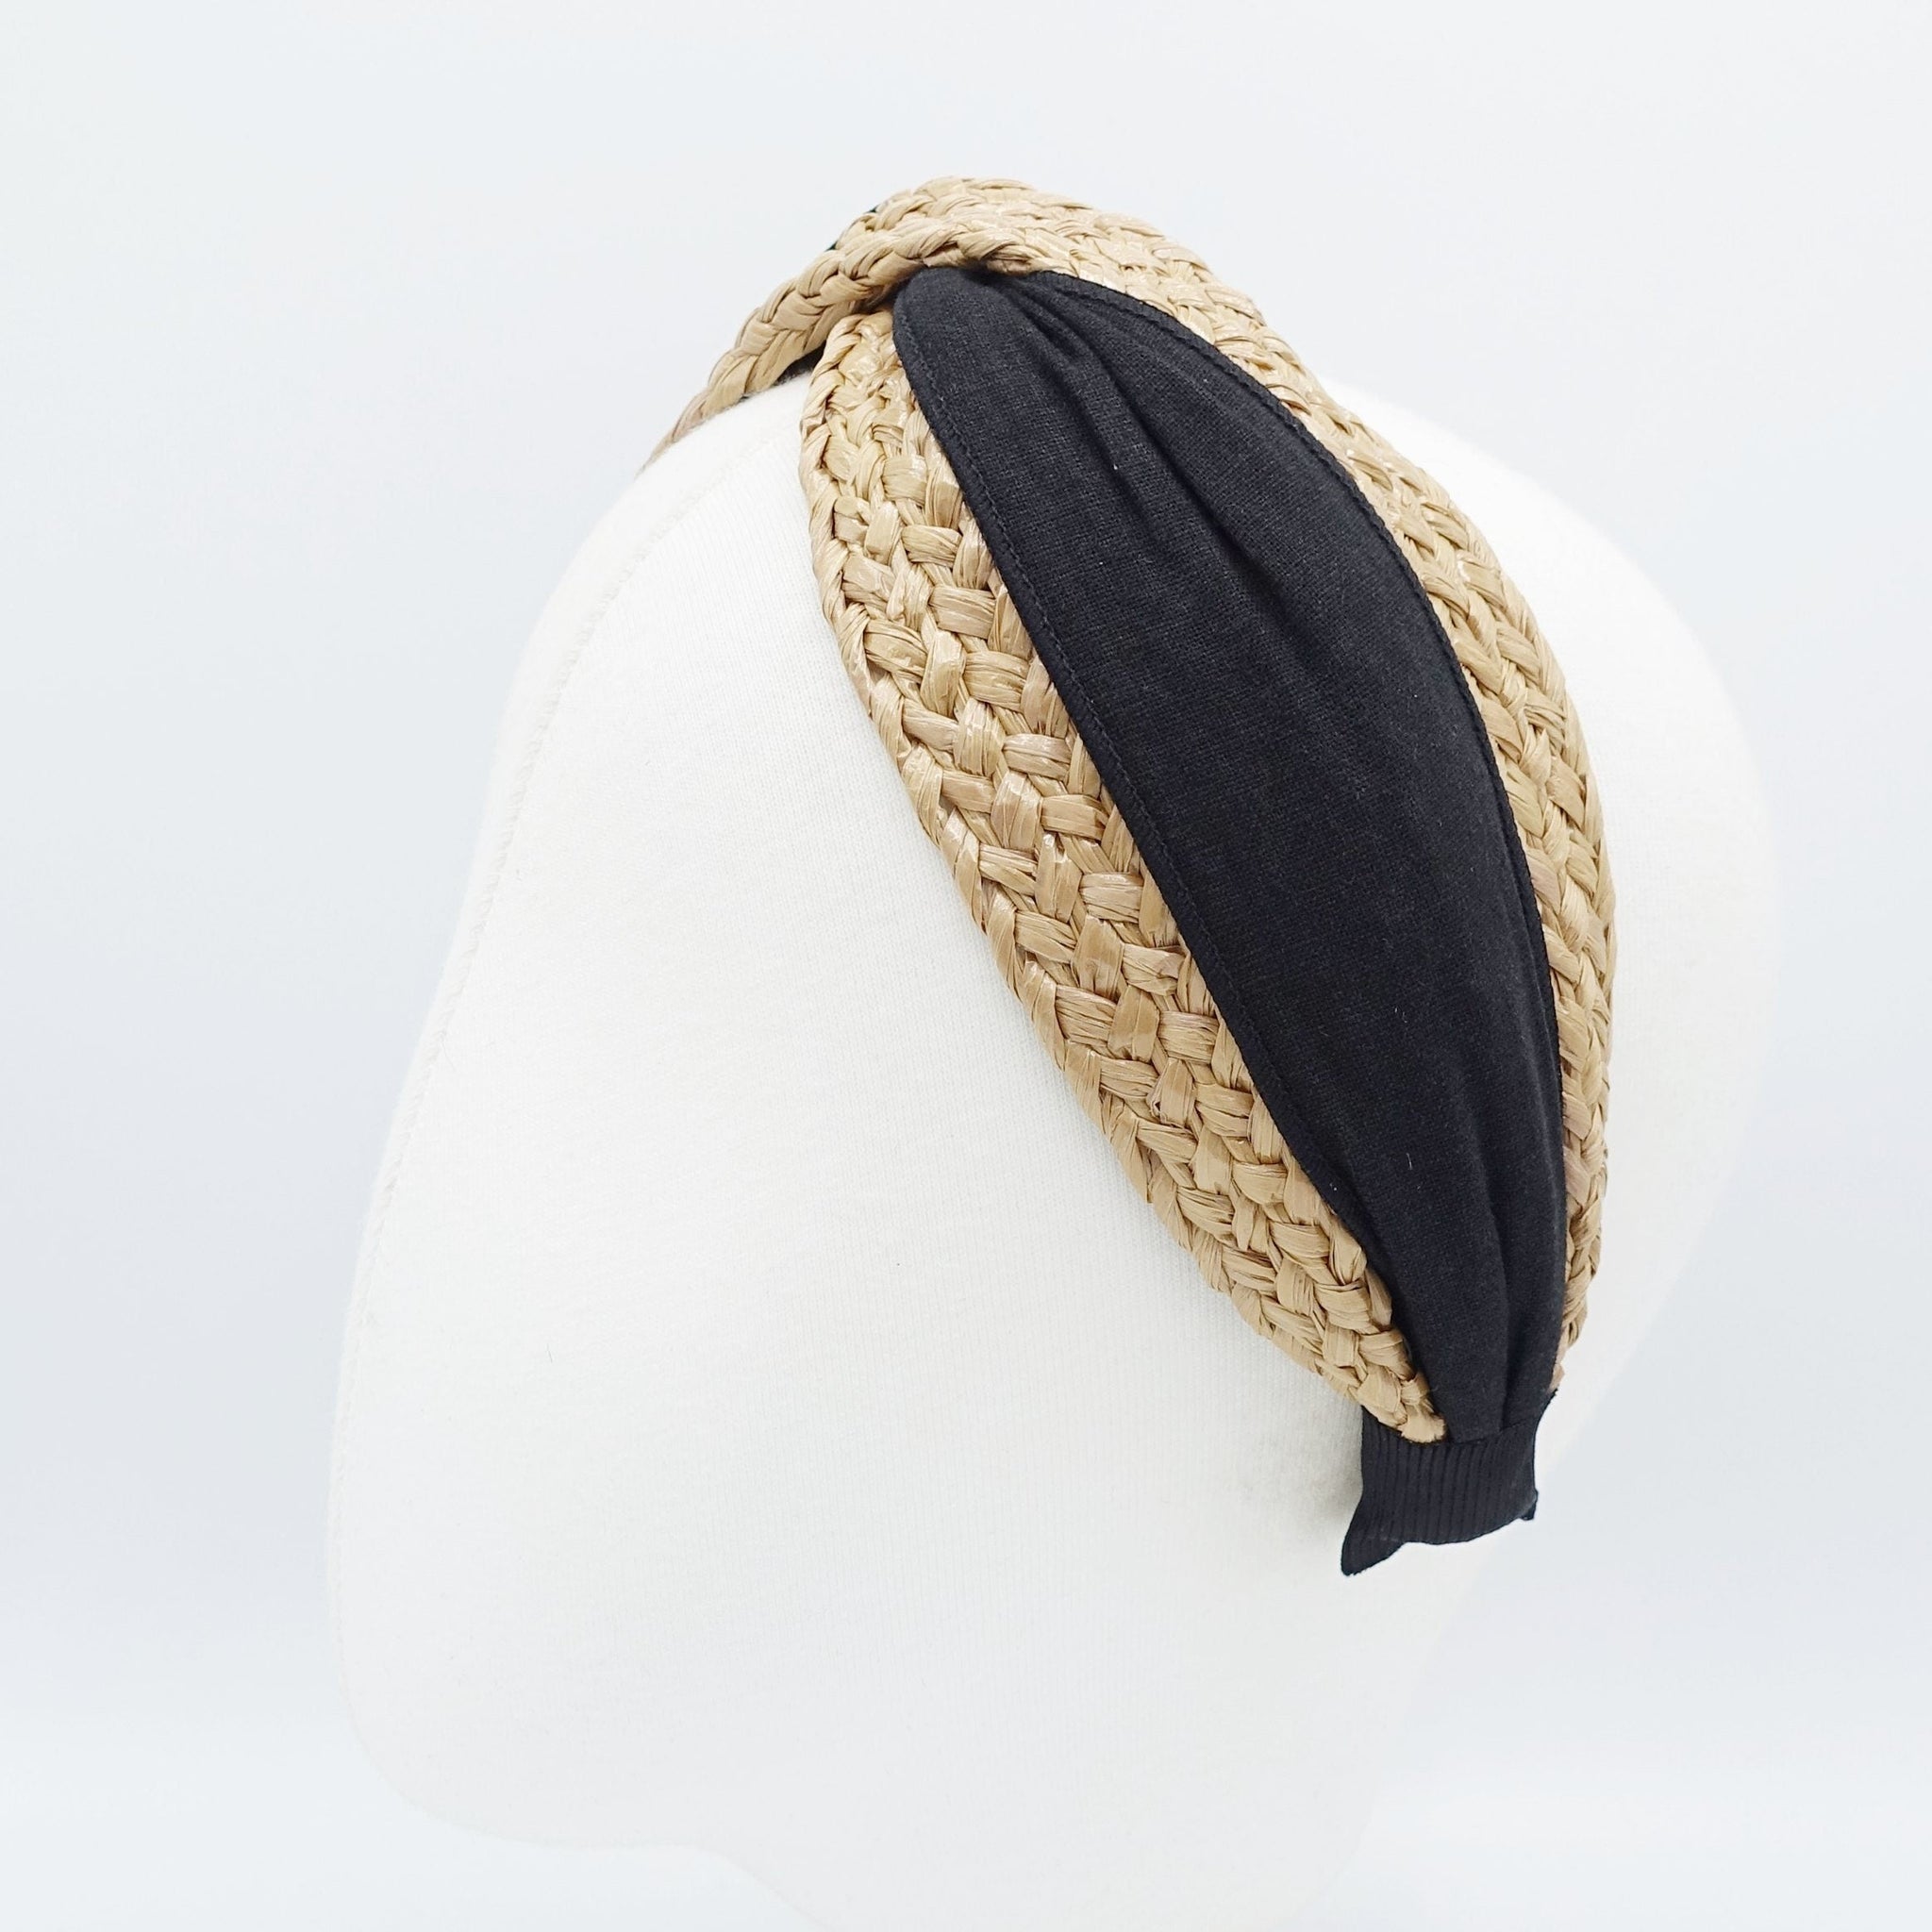 veryshine.com Headband rattan cross headband fabric layered straw hairband Summer holiday hair accessory for women